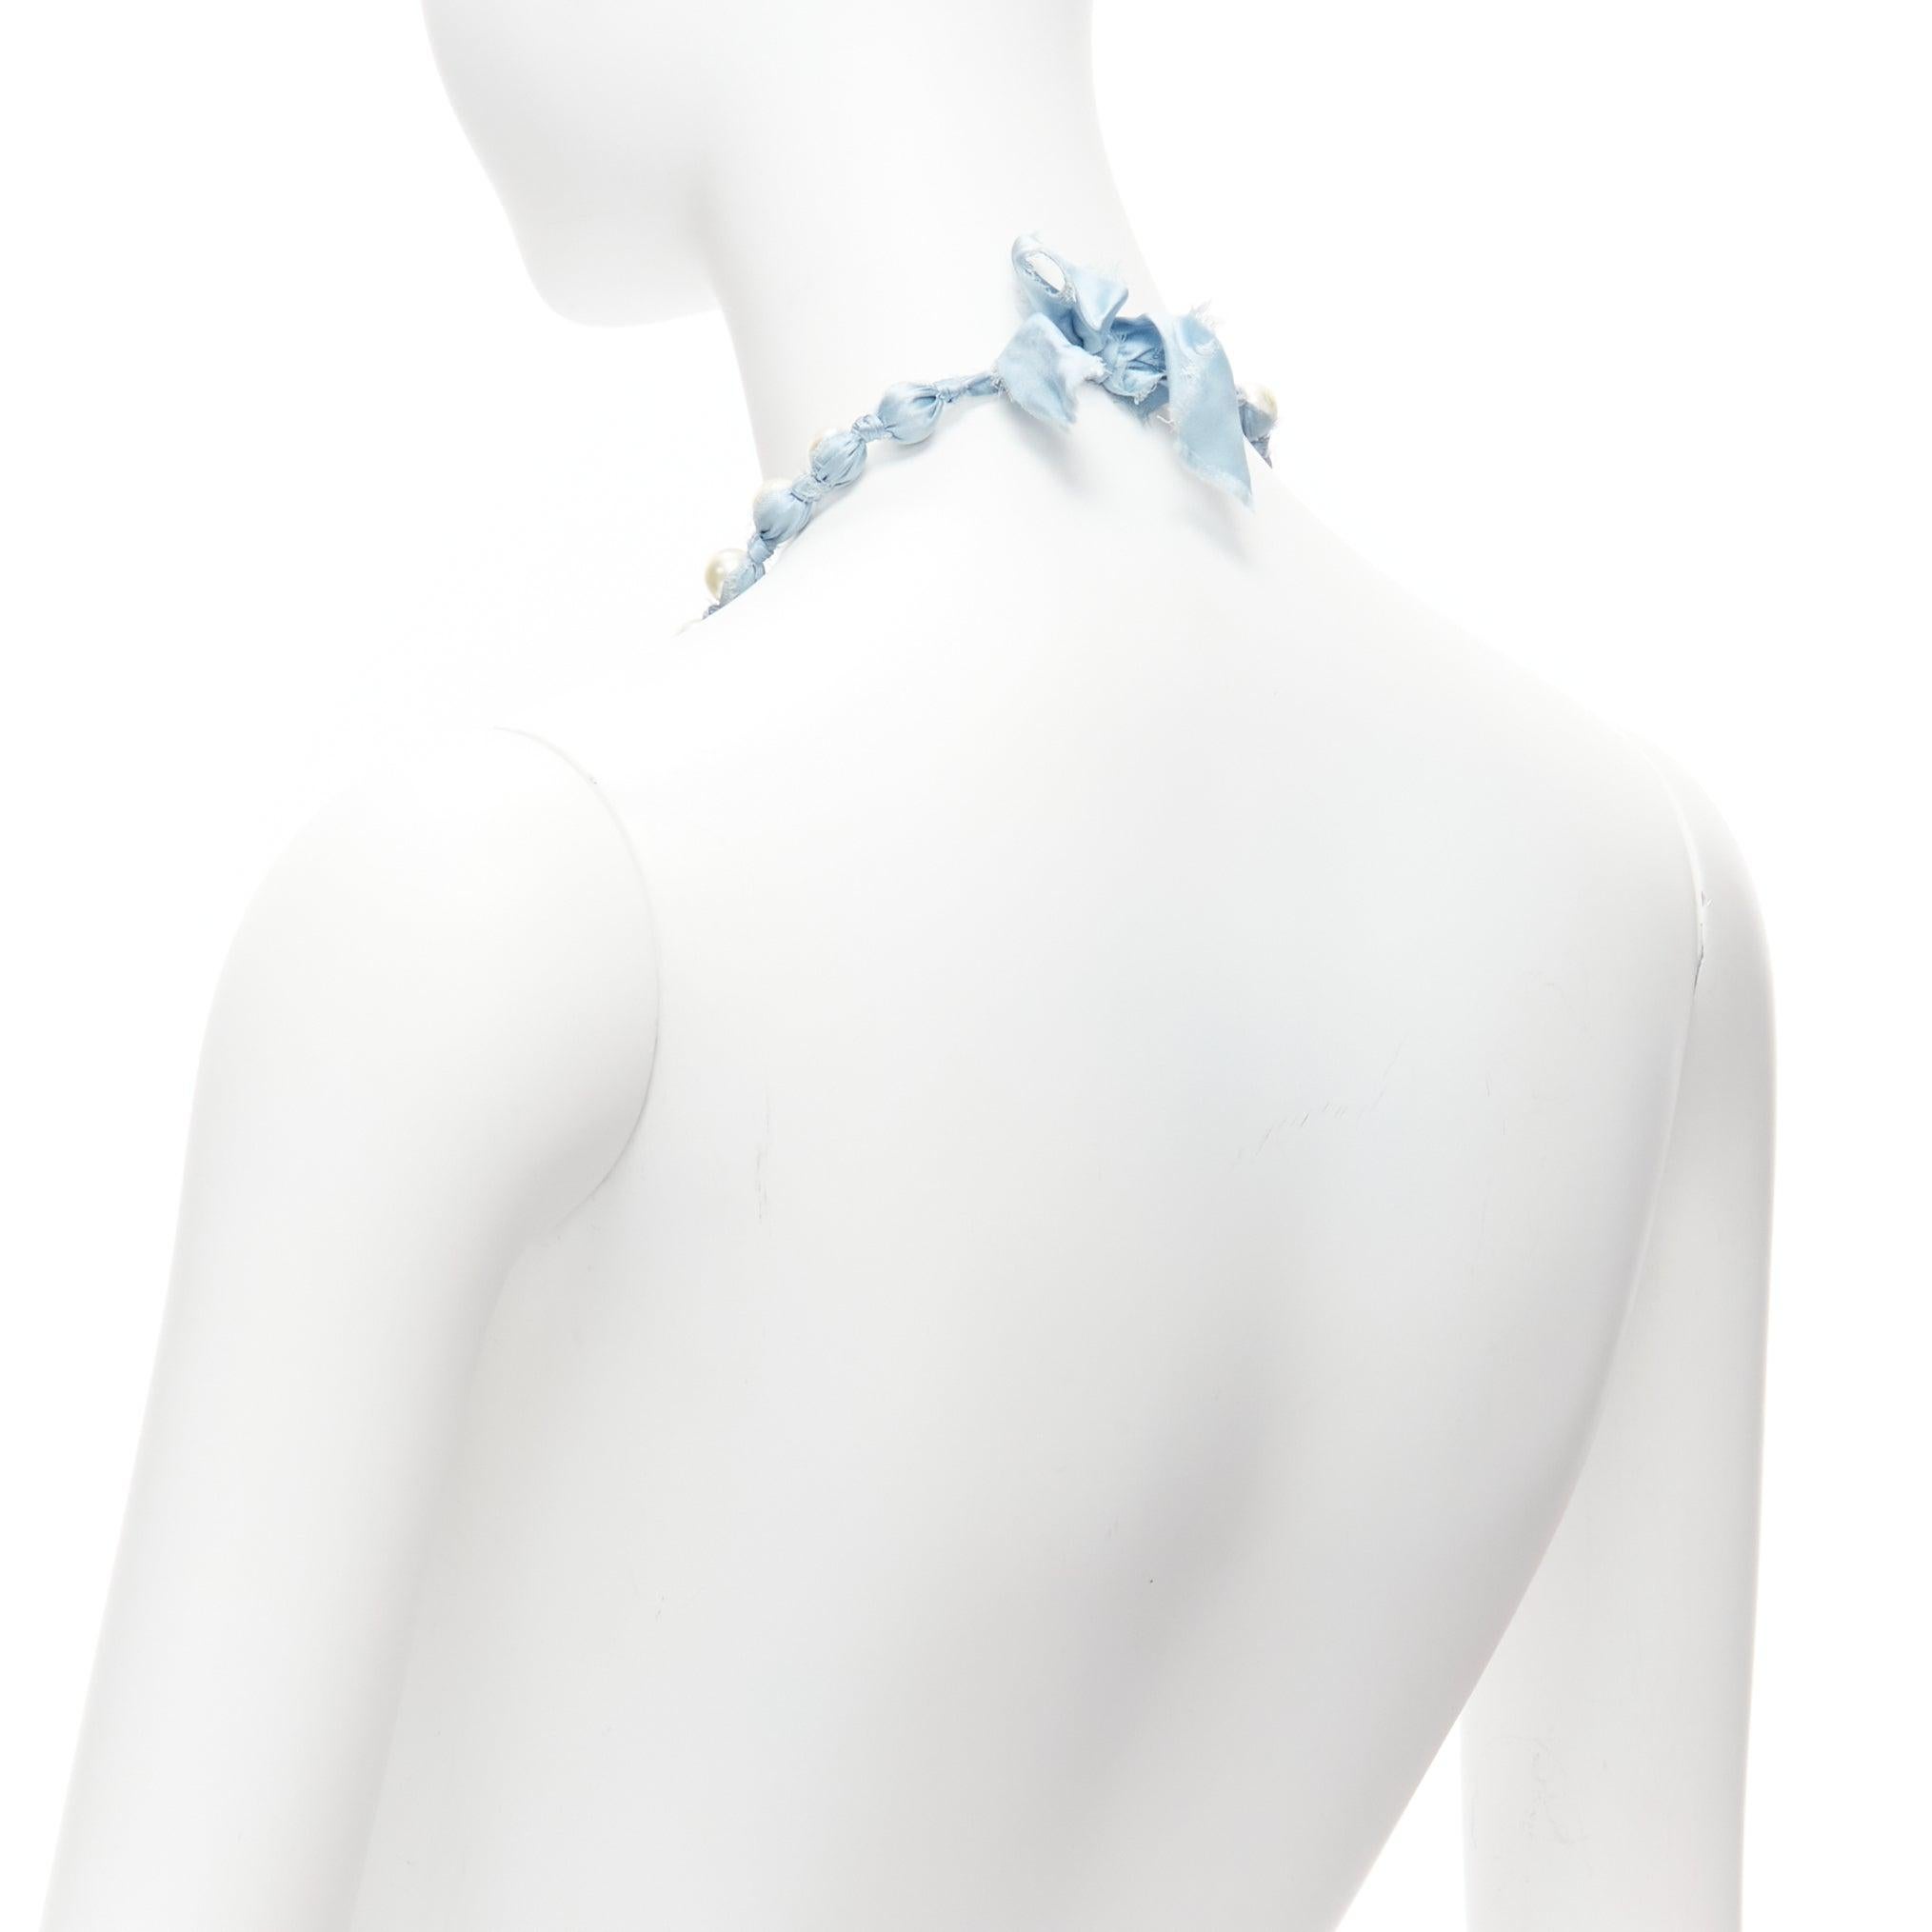 LANVIN ALBER ELBAZ cream pearl blue silk ribbon wrap long necklace For Sale 2